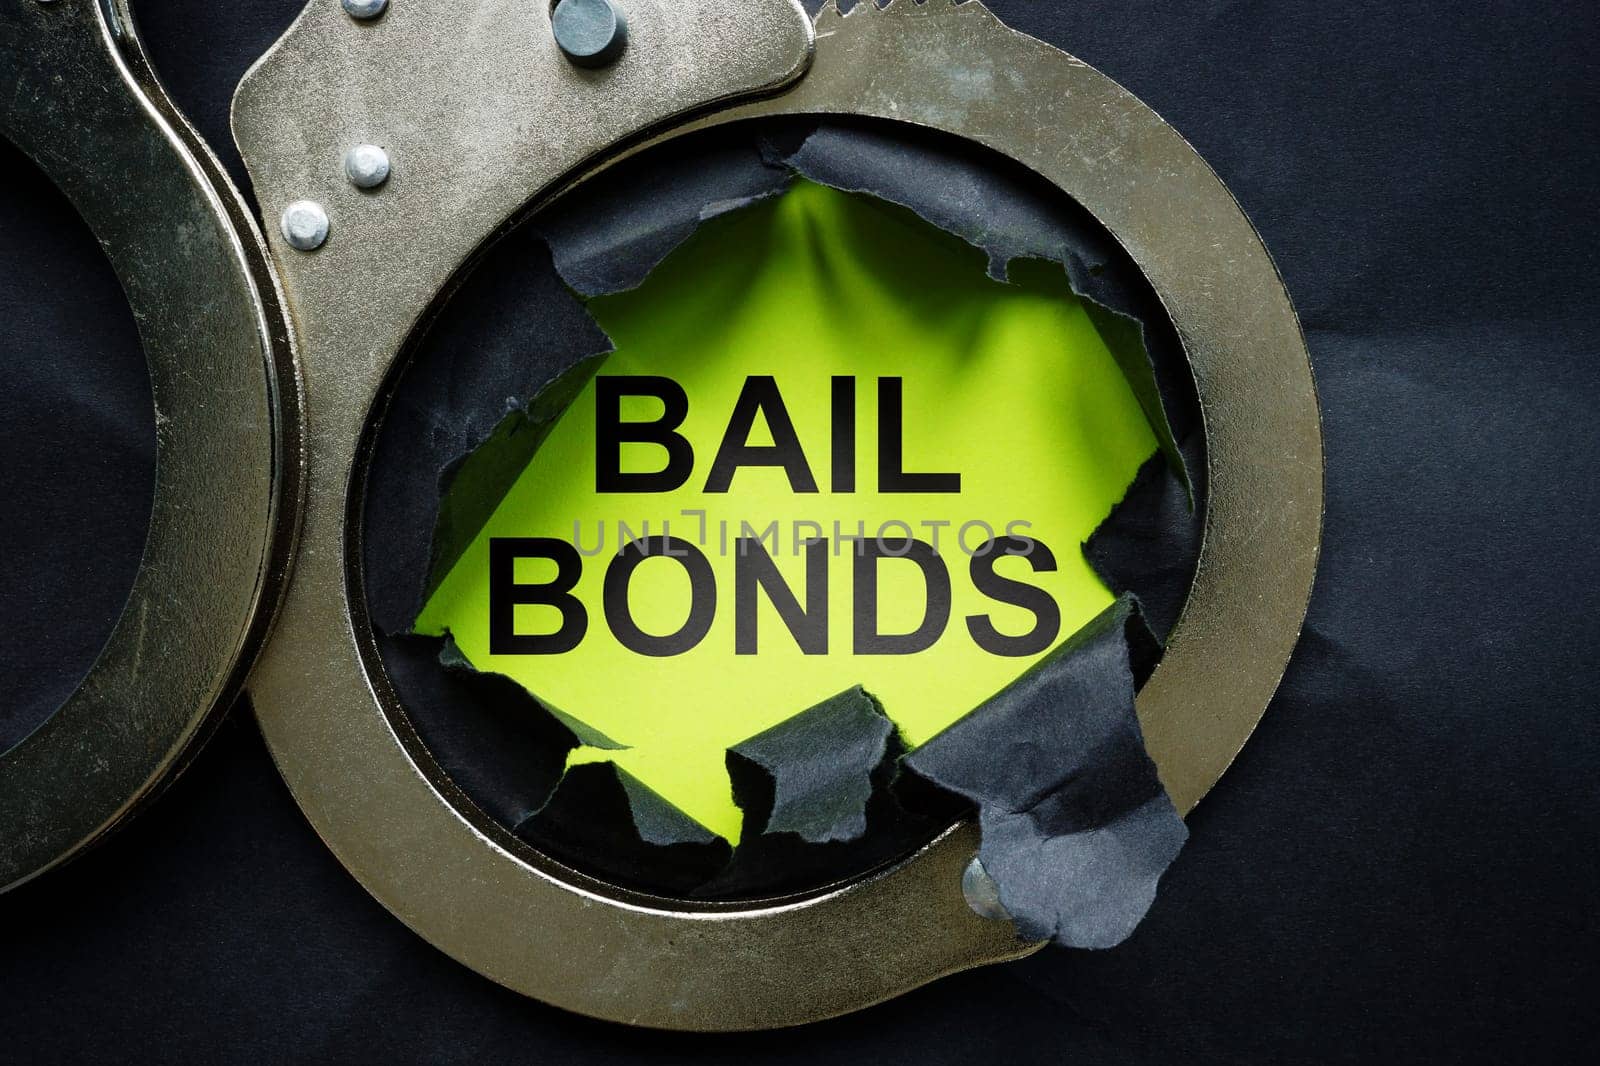 Bail bonds inscription and metal handcuffs.